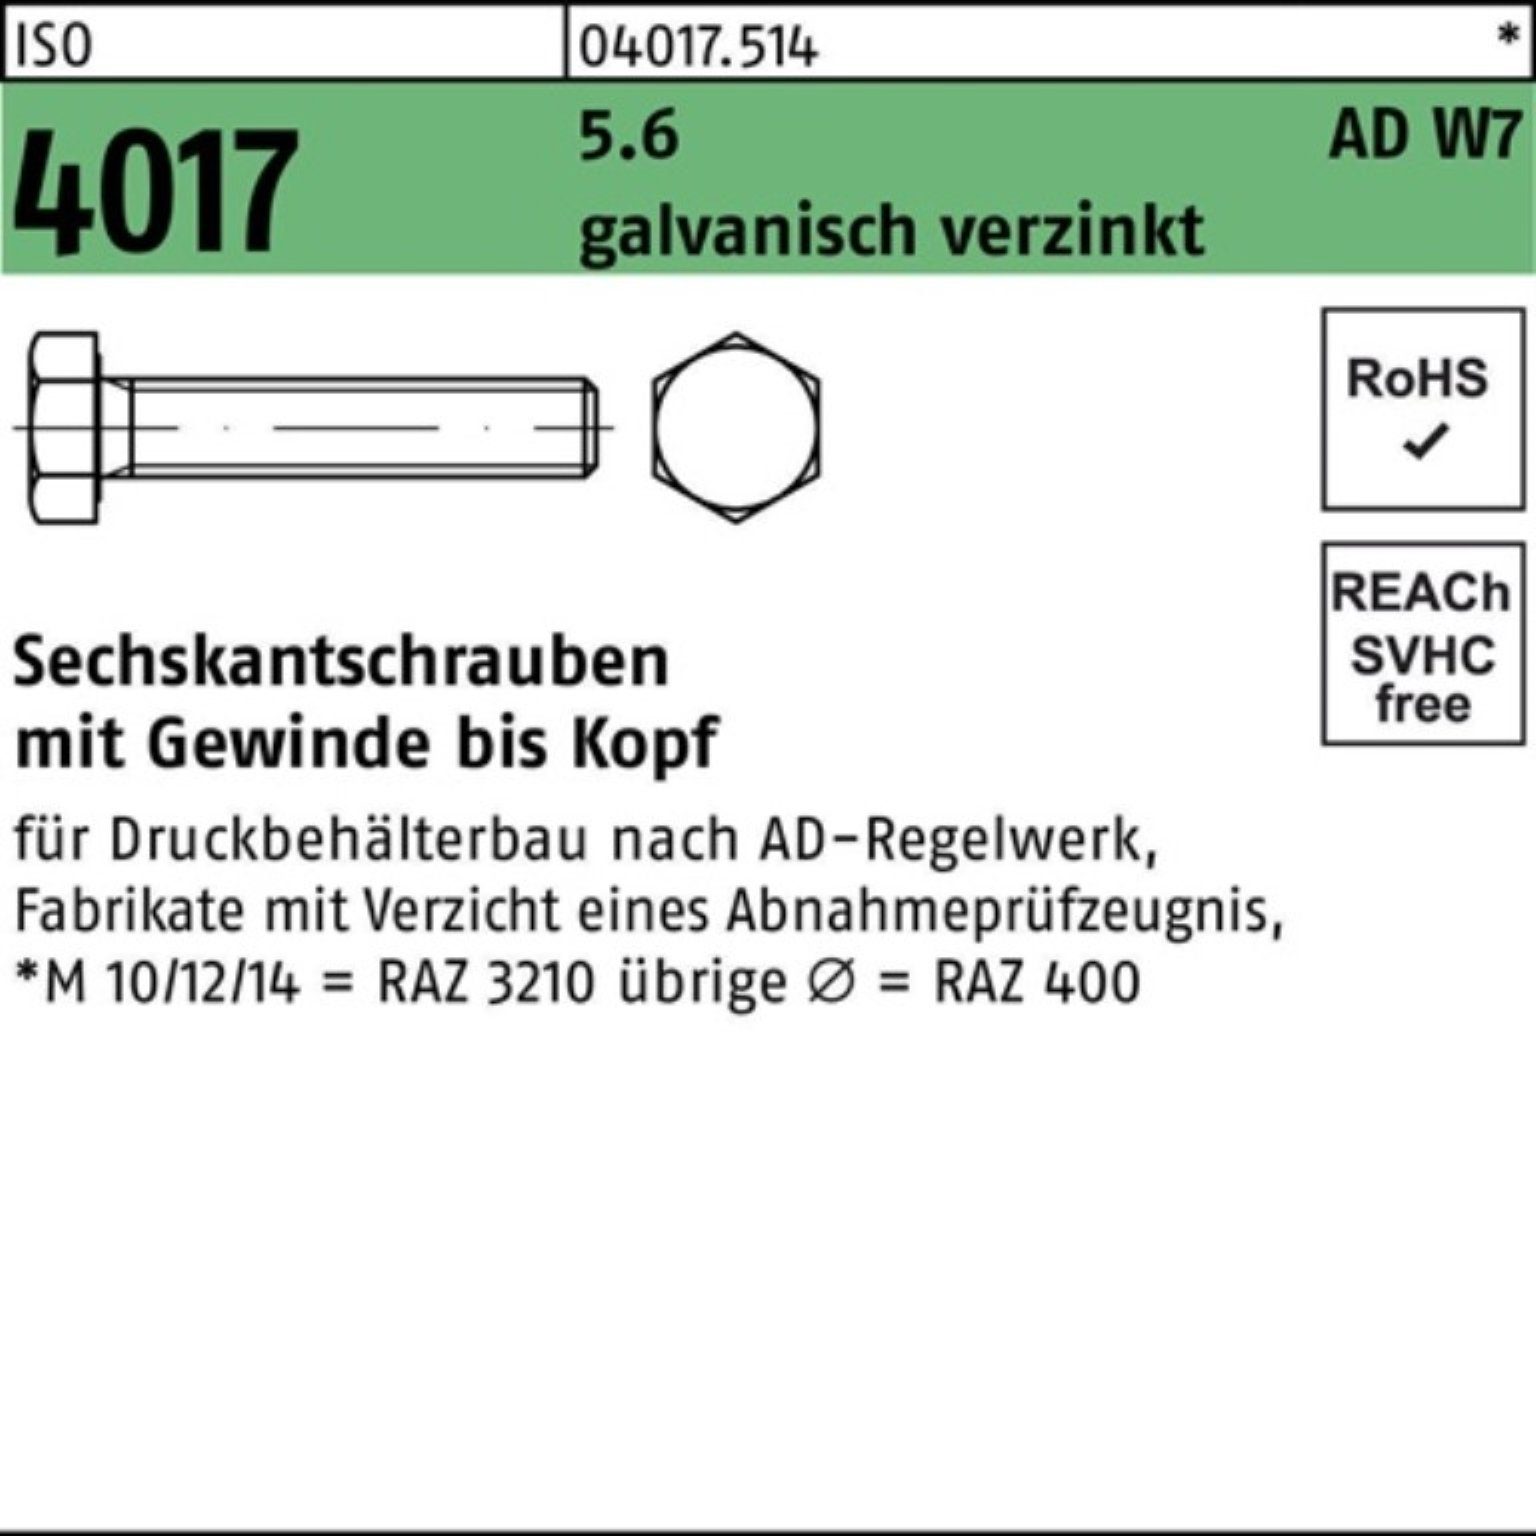 VG Bufab Pack 5.6 W7 M24x ISO galv.verz. Sechskantschraube 100er 150 AD Sechskantschraube 4017